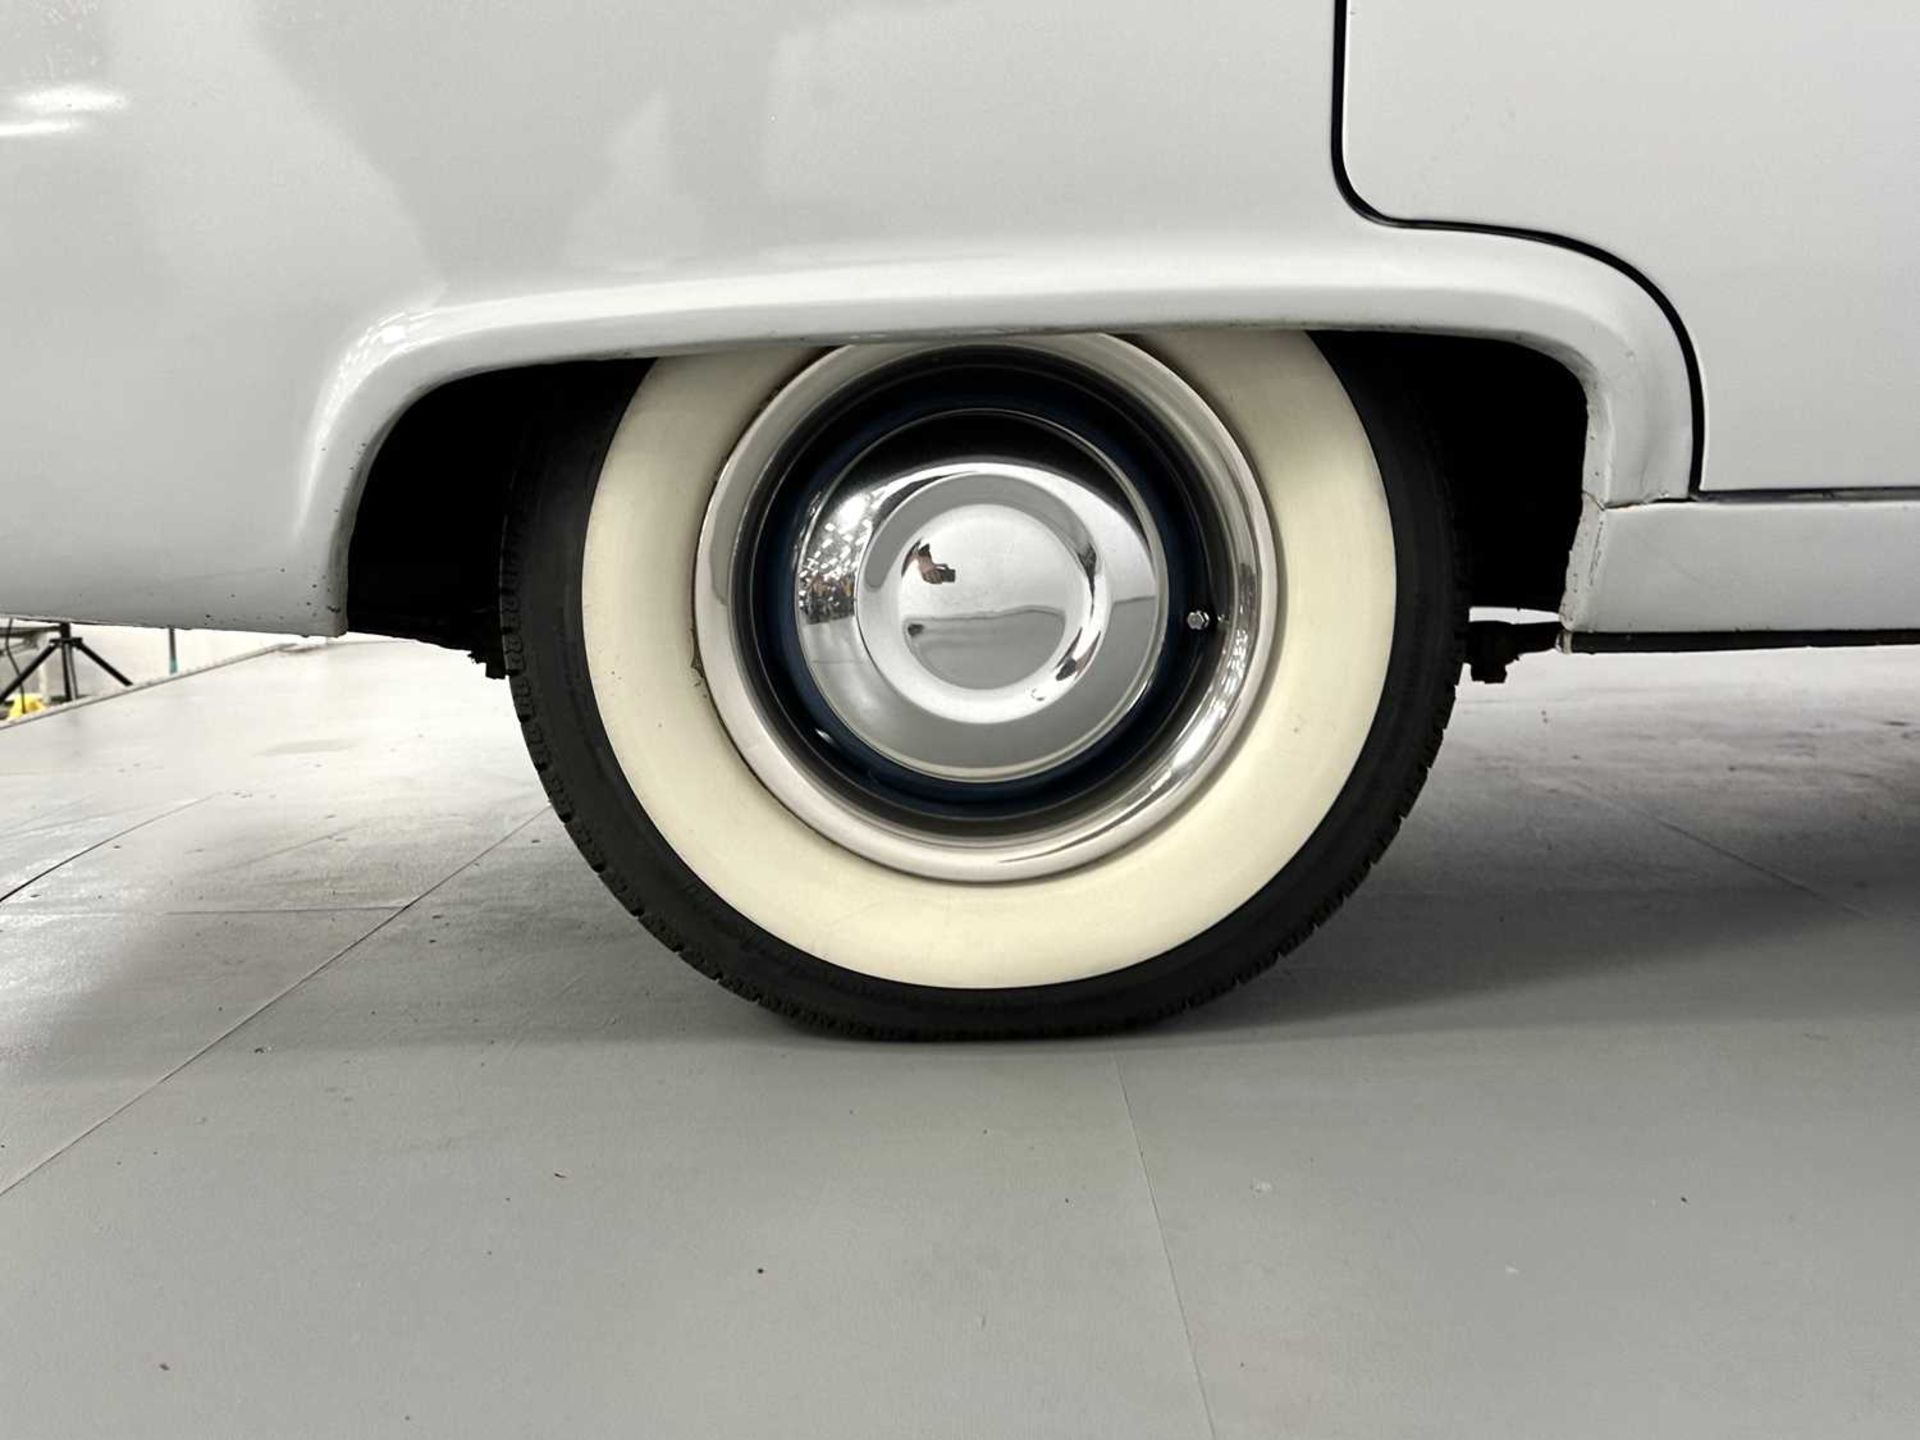 1959 Ford Zodiac Highline - Image 14 of 35